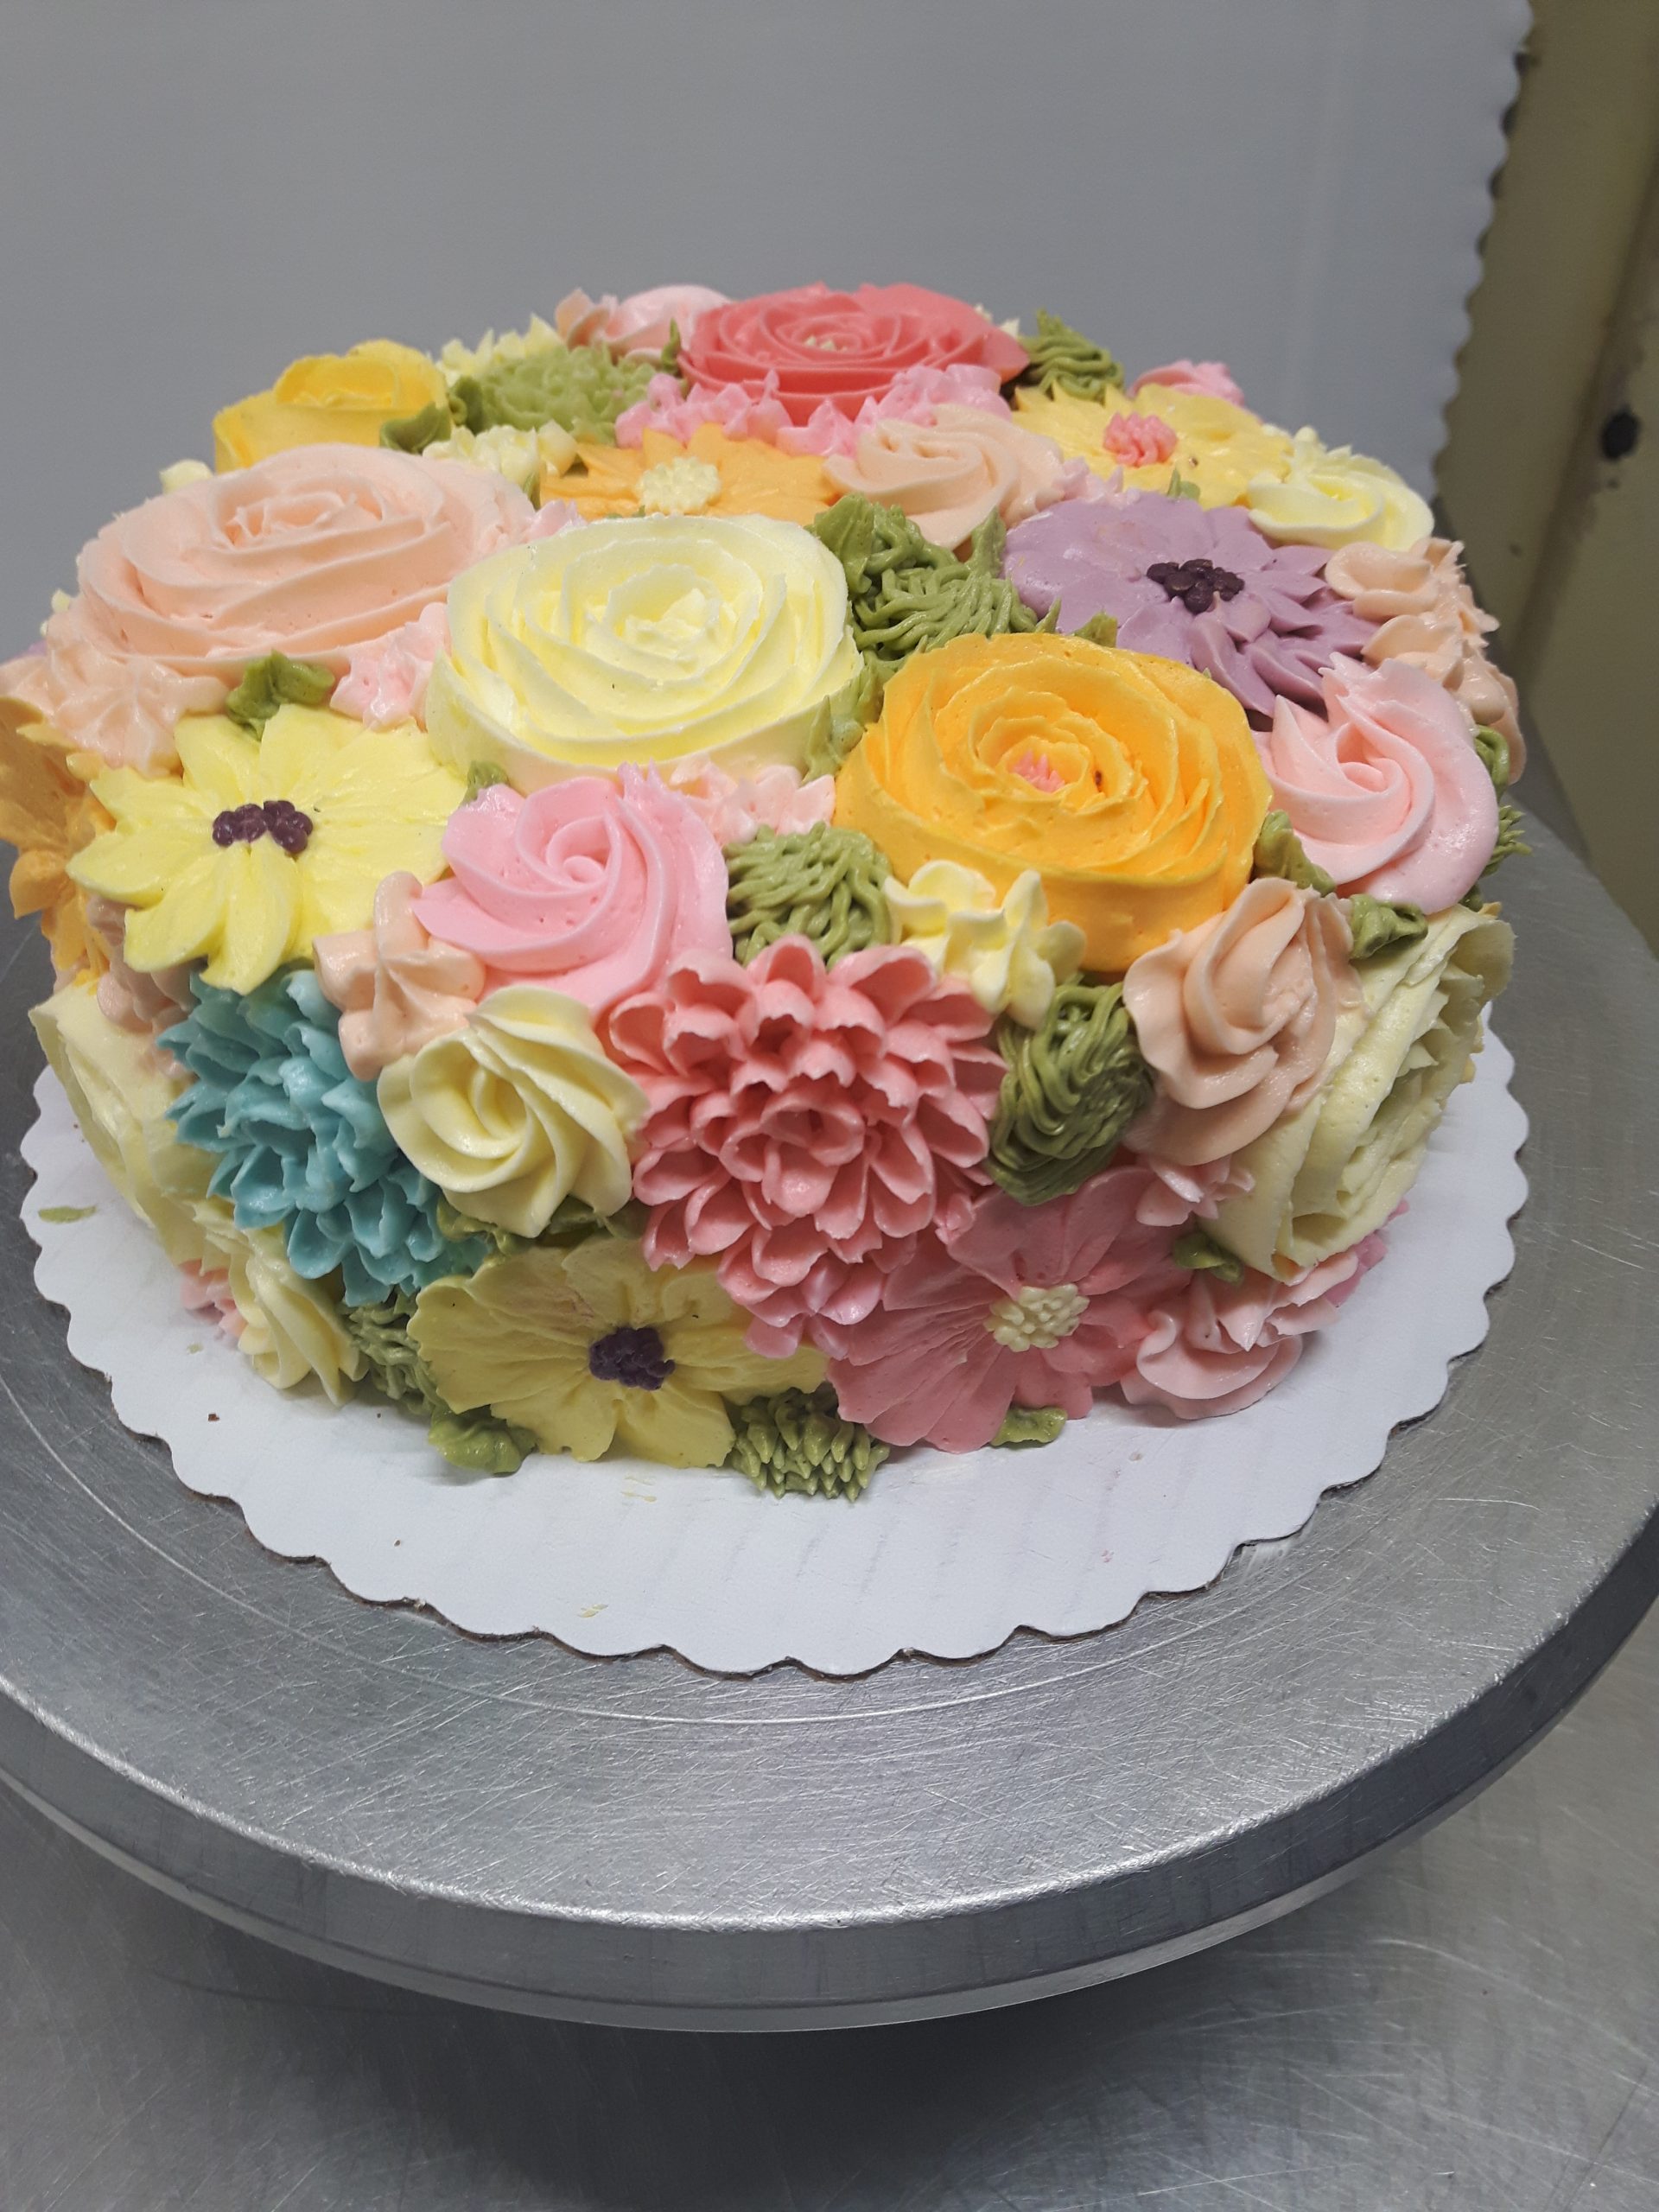 round birthday cakes with flowers